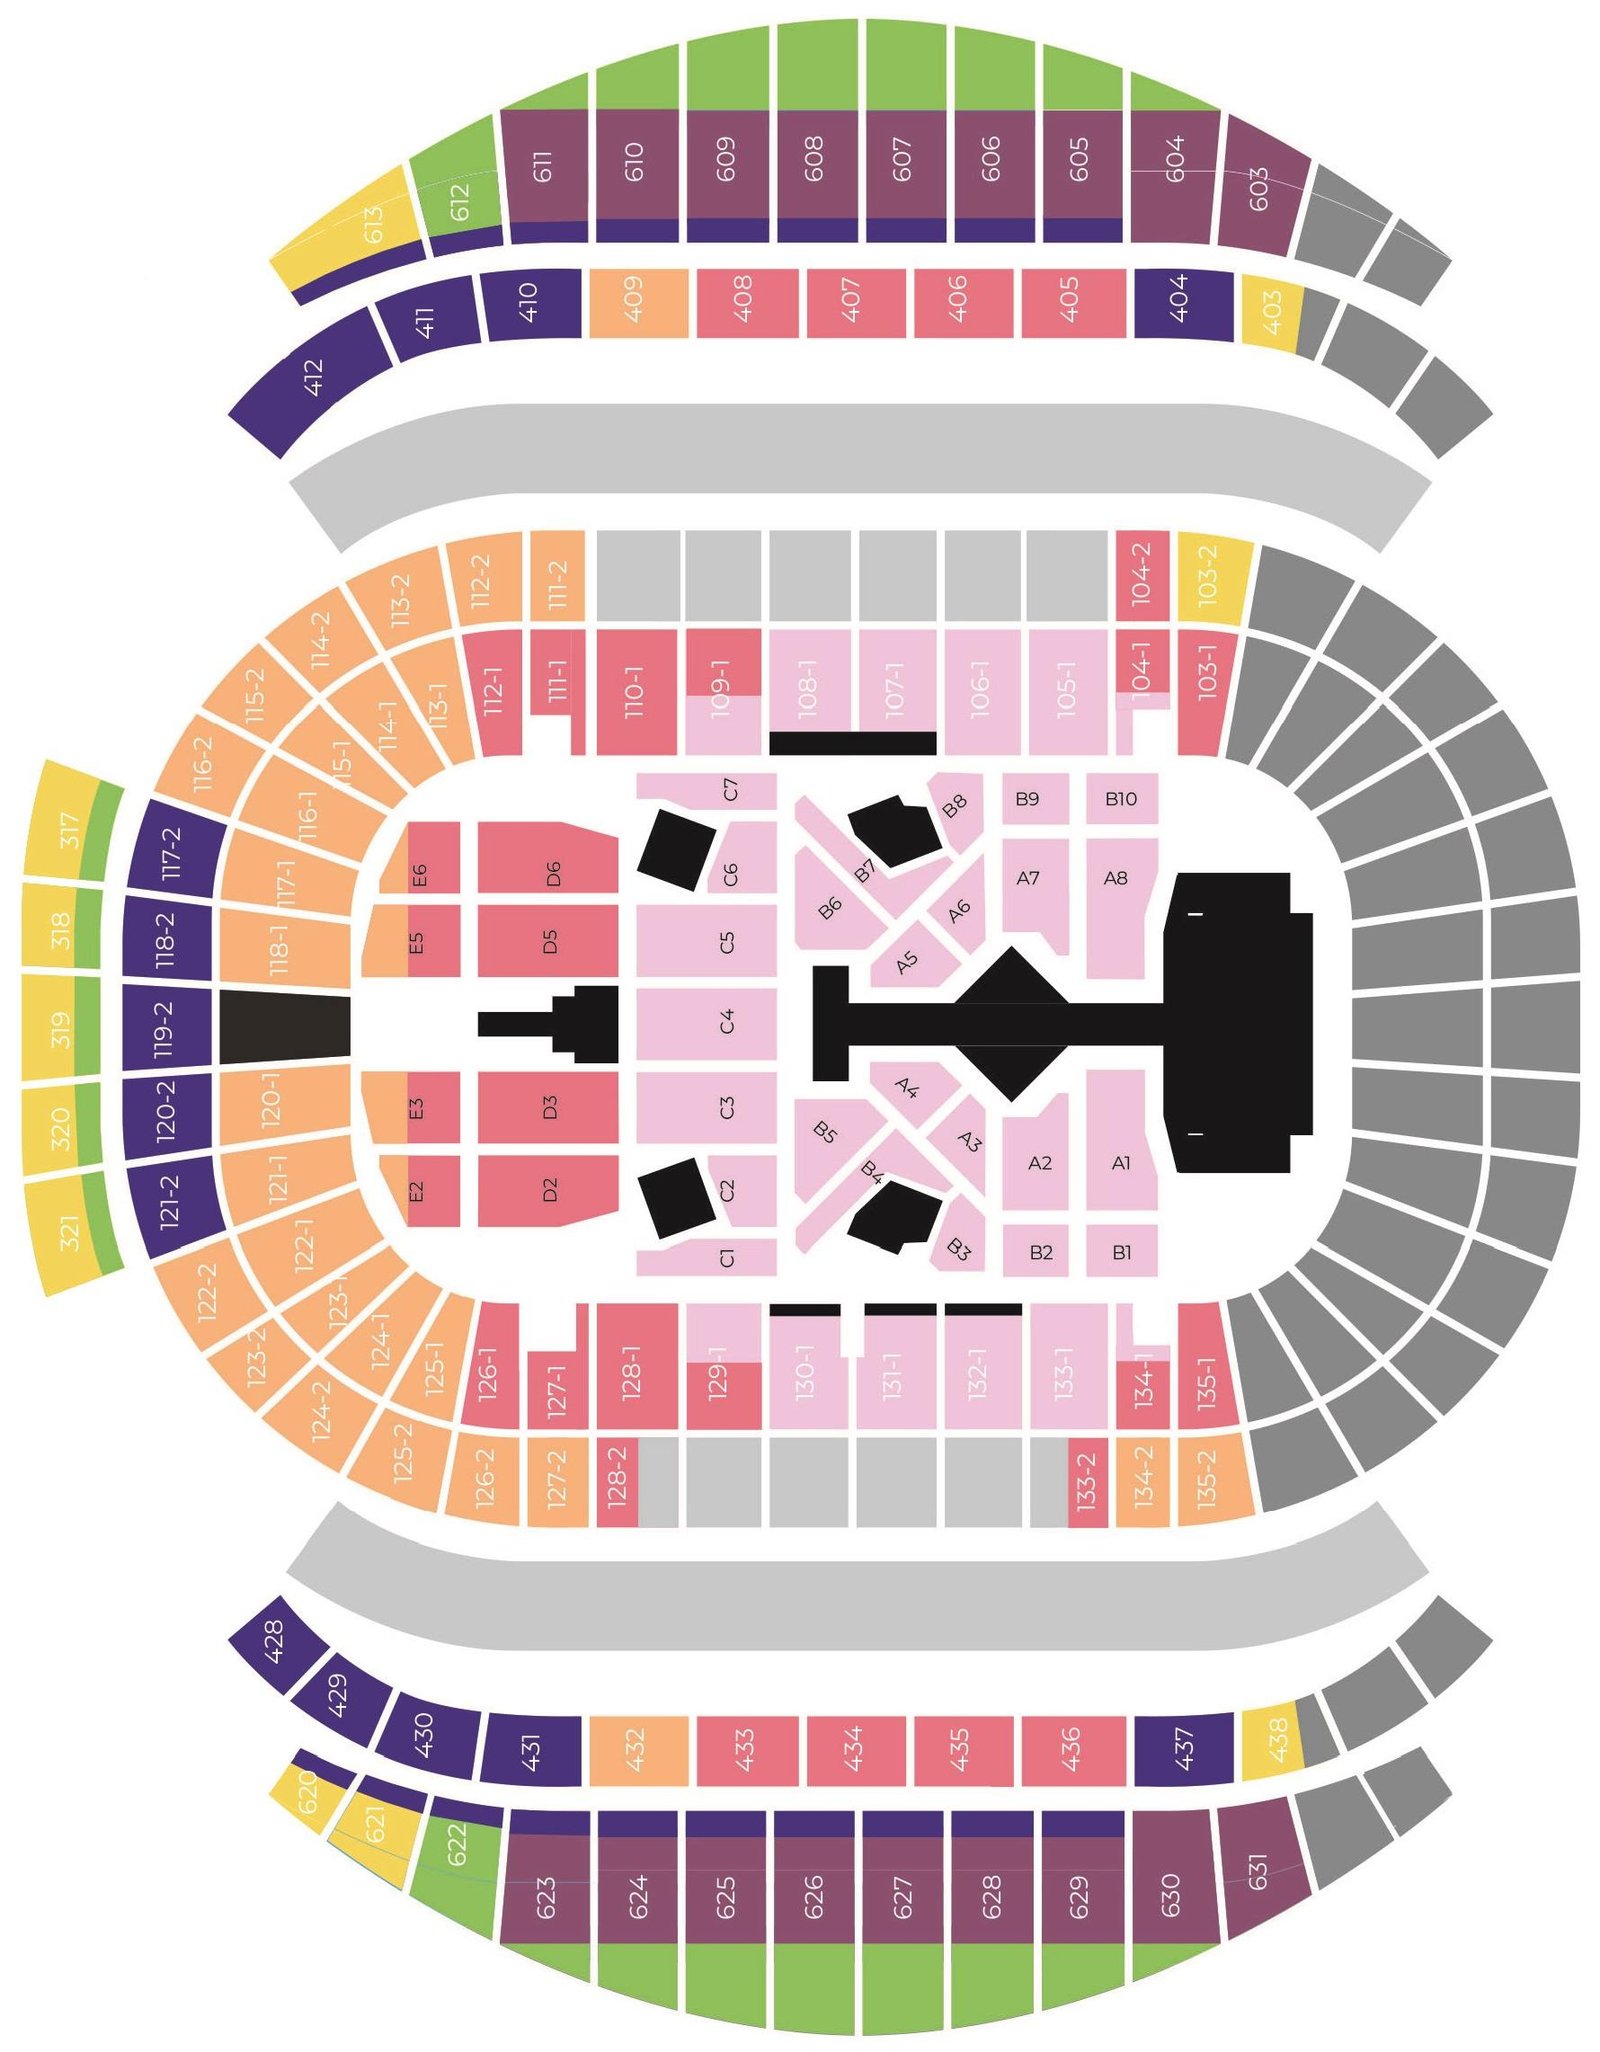 Stadium Australia Concerts Map with Rows